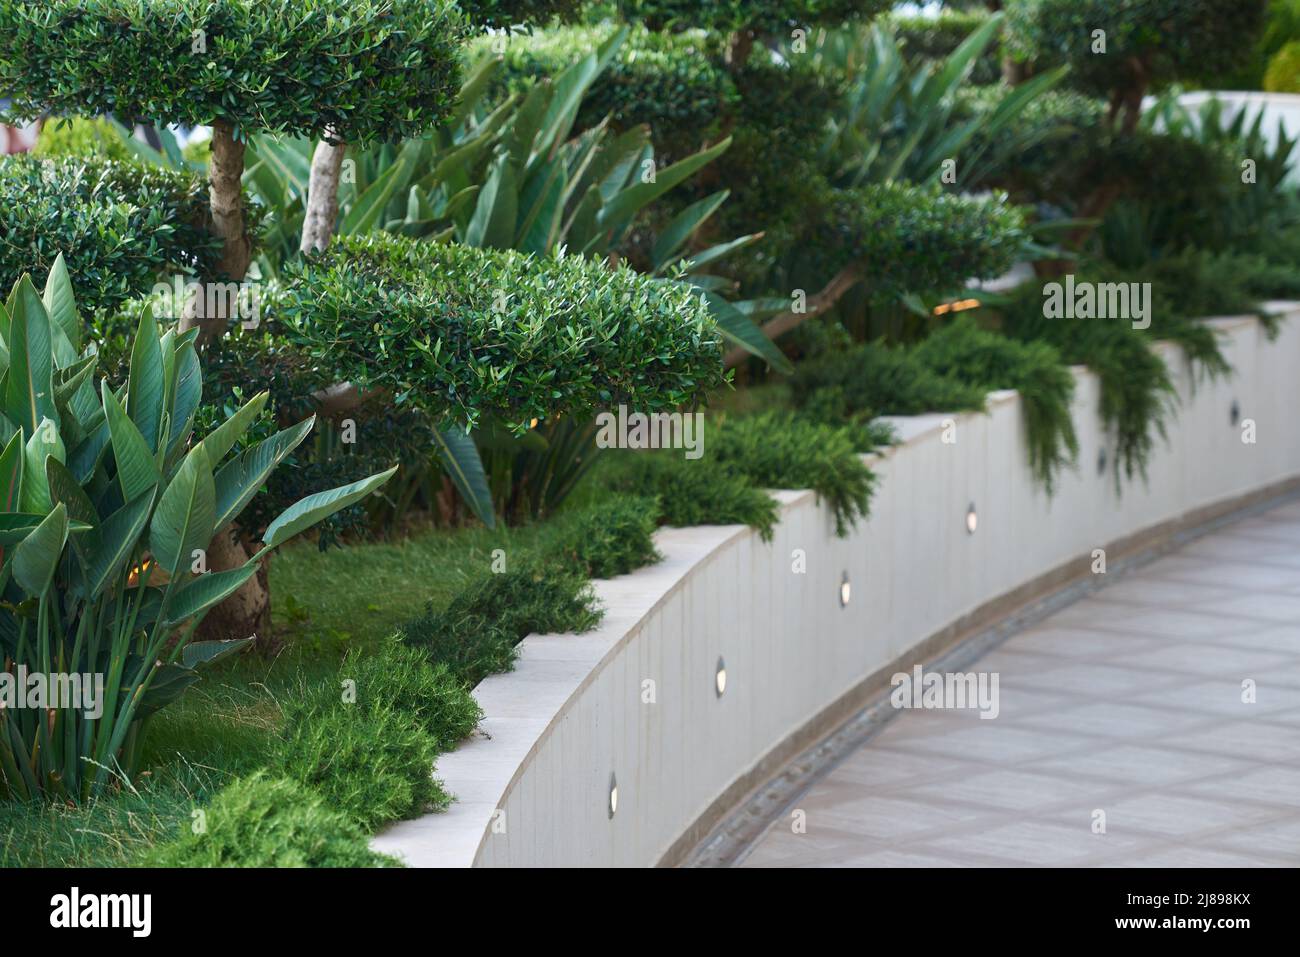 Gardening with ornamental shrubs for landscape design Stock Photo